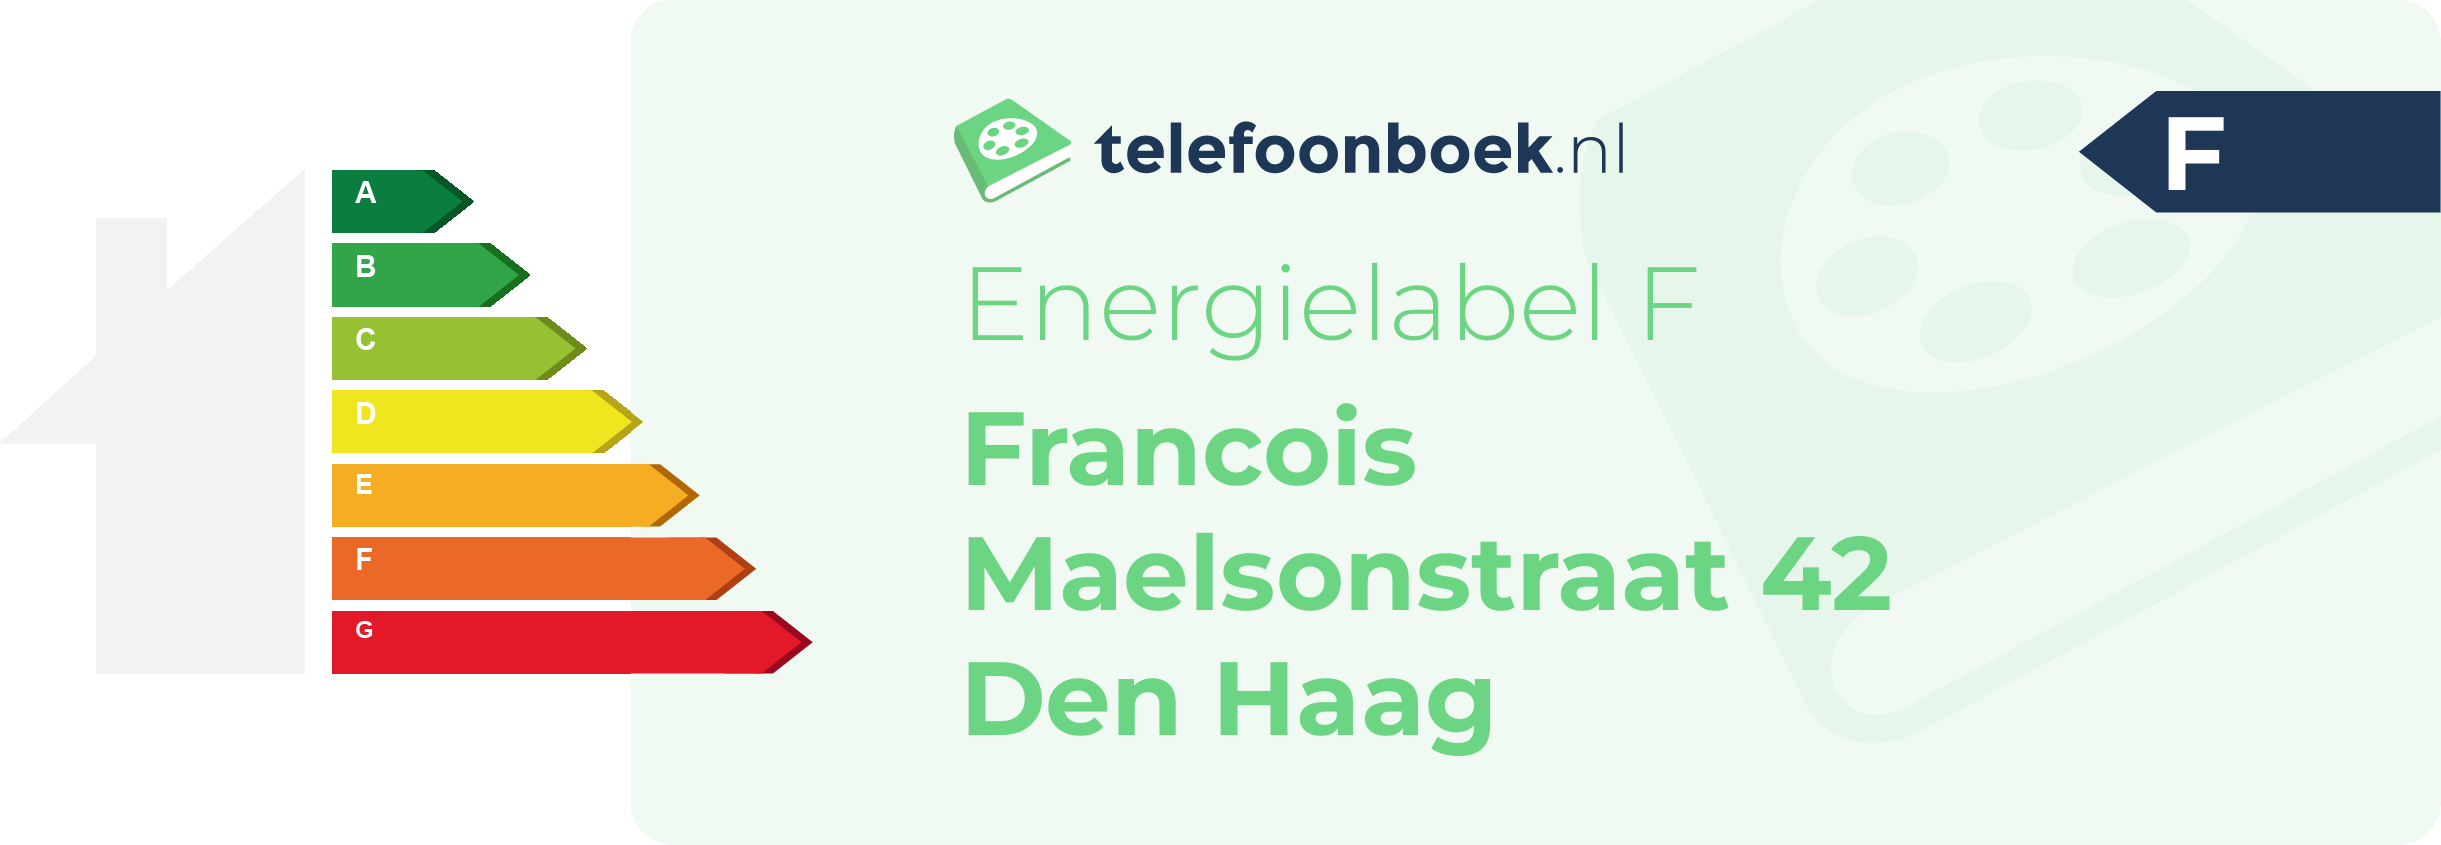 Energielabel Francois Maelsonstraat 42 Den Haag